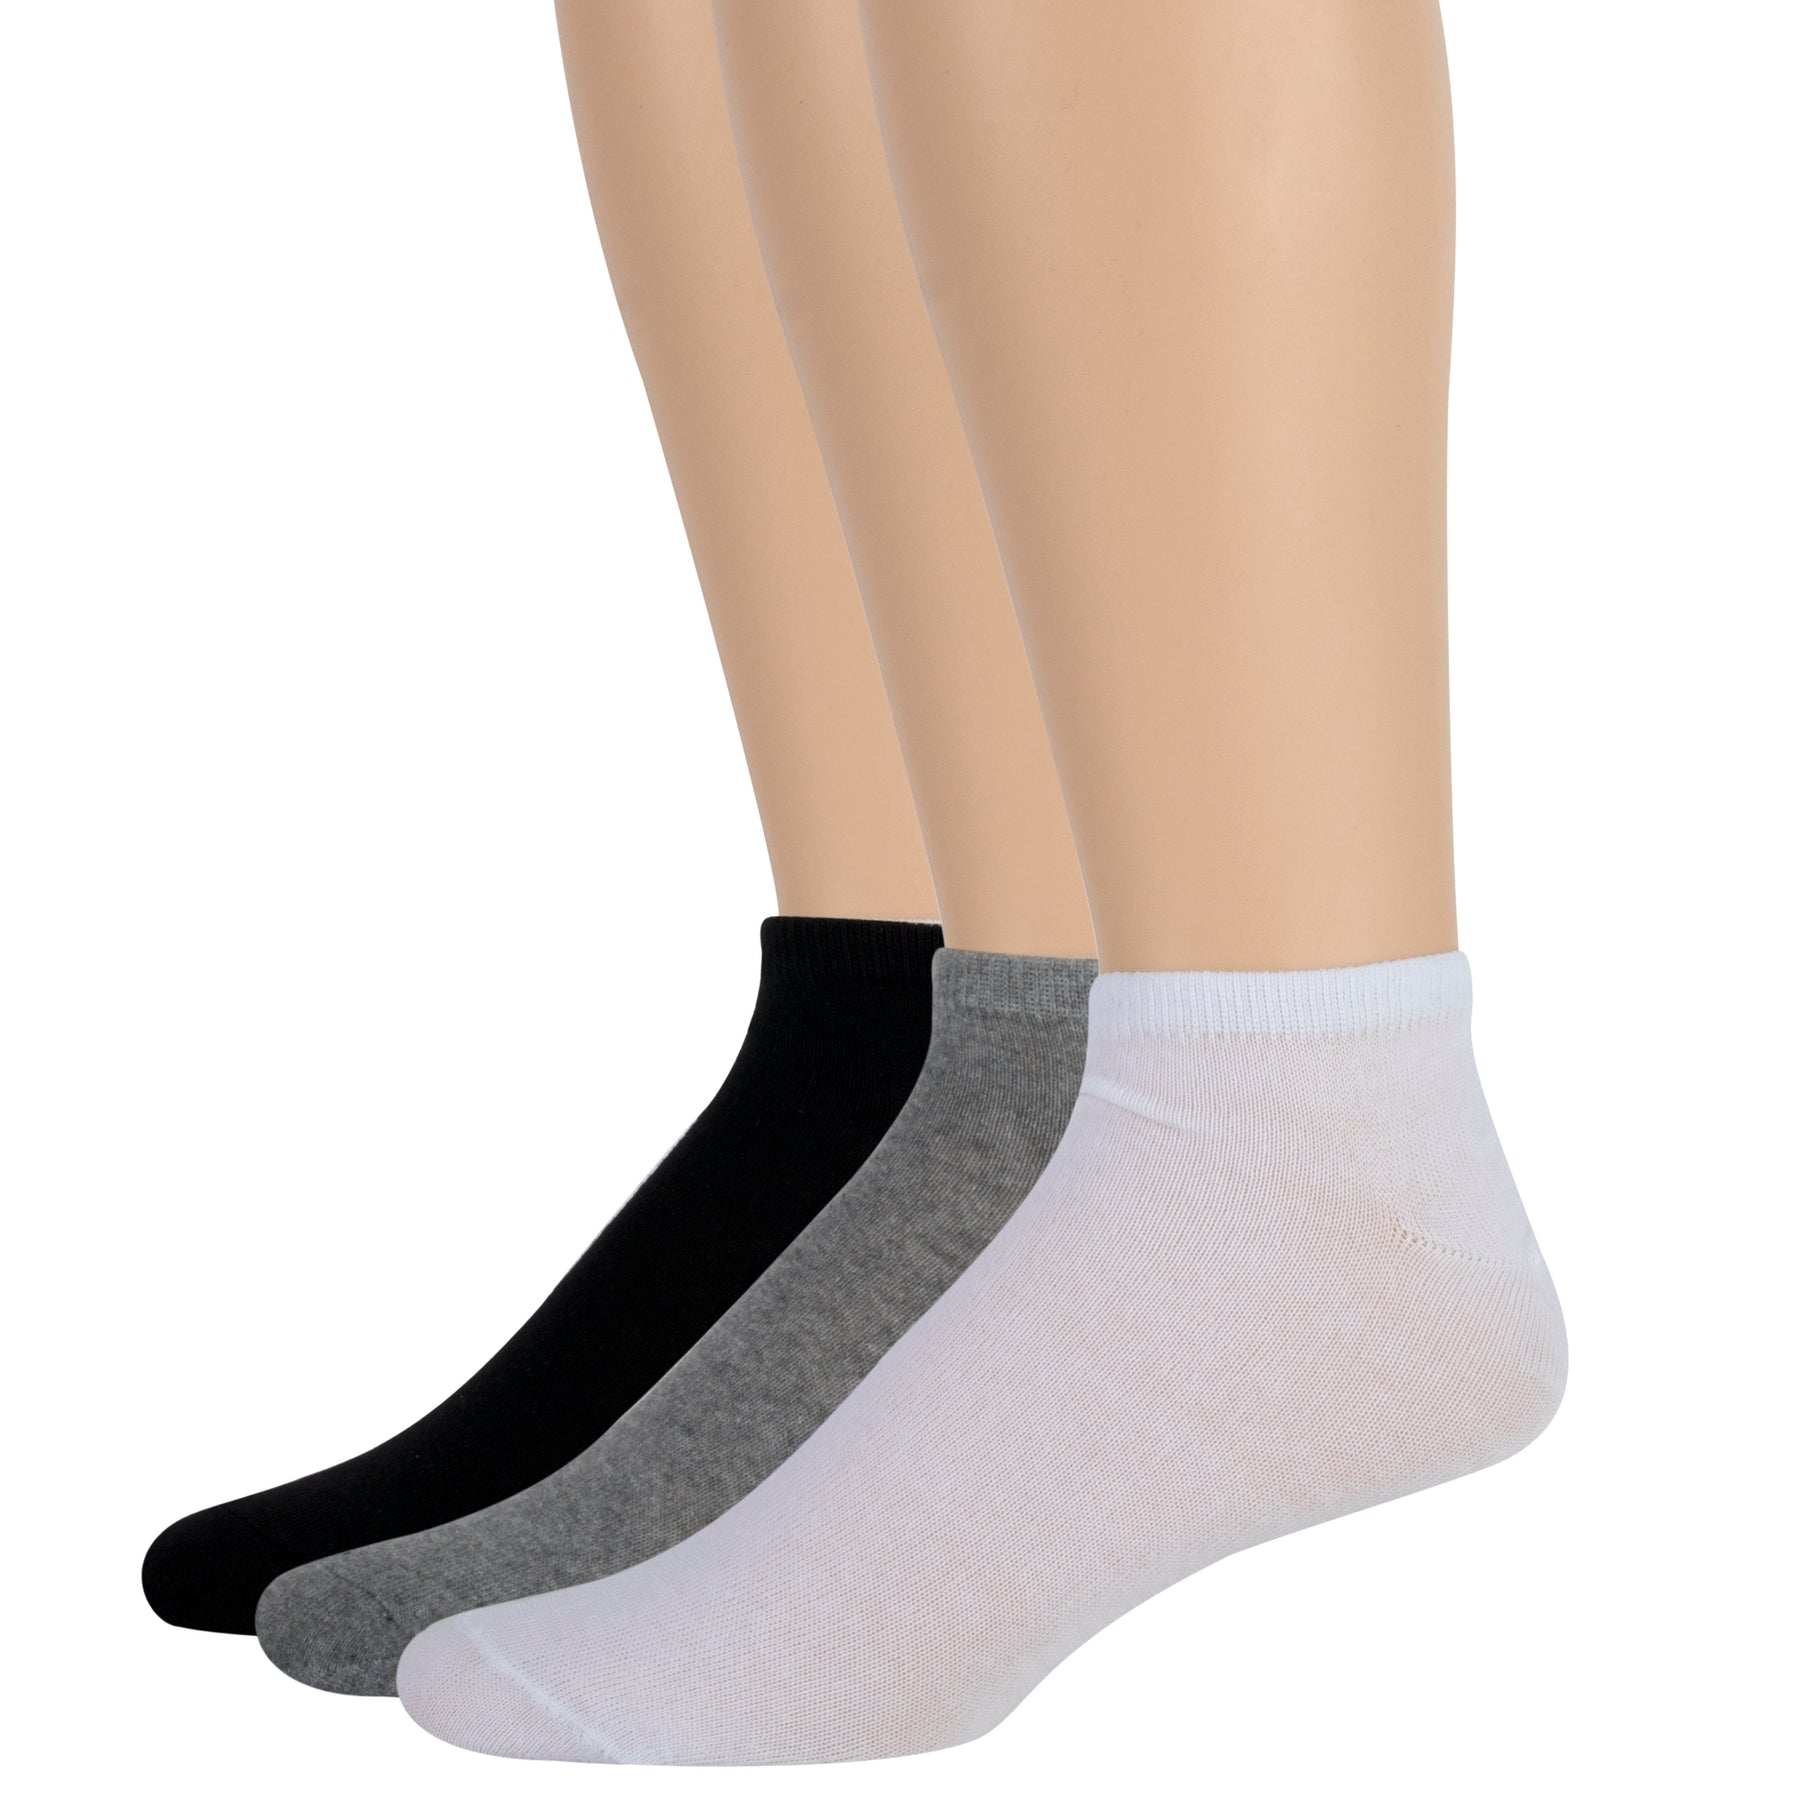 Wholesale Women's Ankle Socks, 3 Colors | Bags in Bulk — BagsInBulk.com